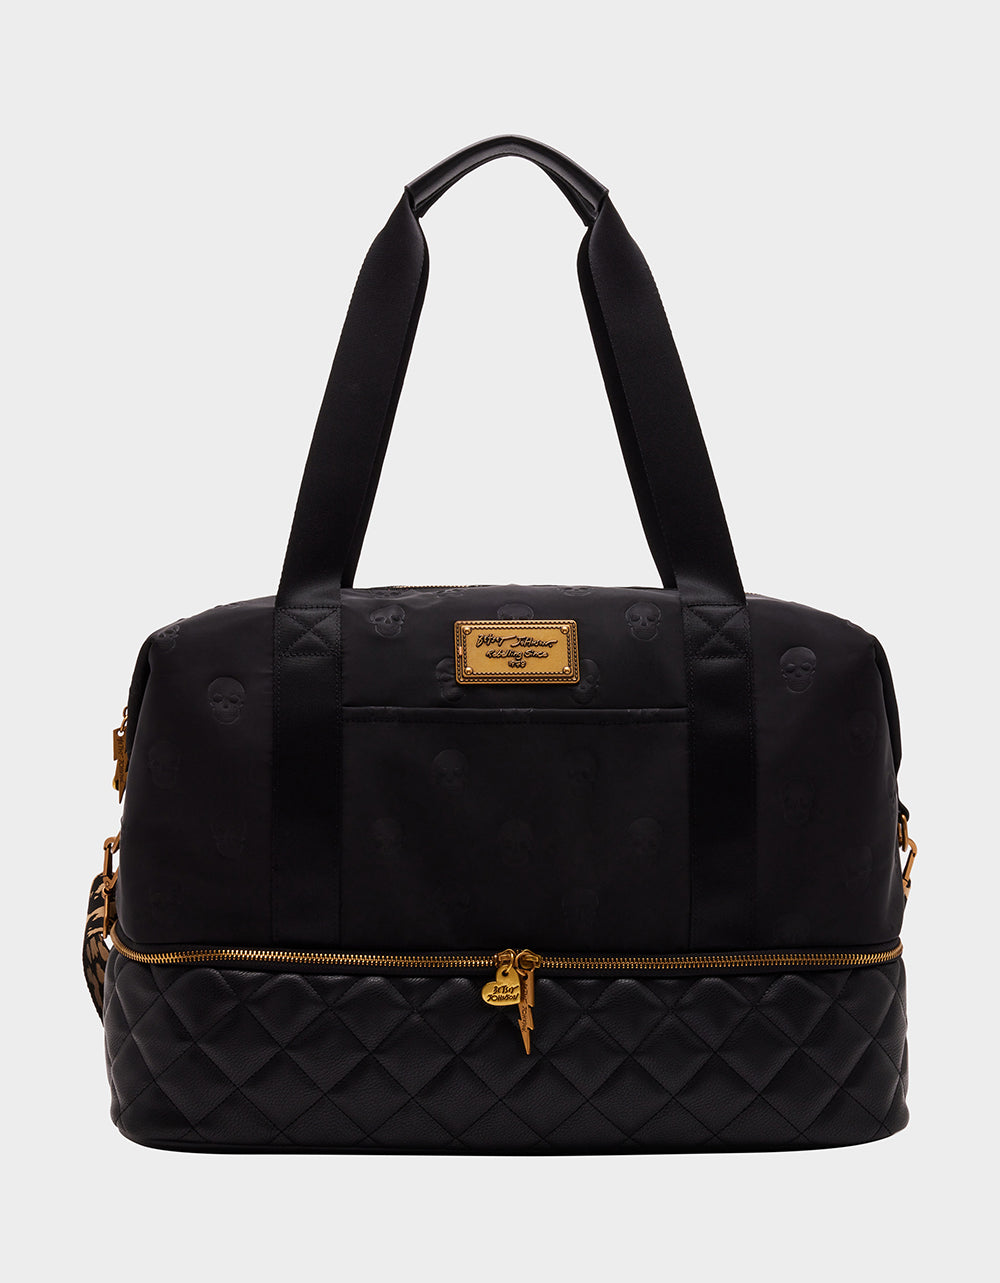 SKULLICIOUS WEEKENDER BLACK | Women's Duffle Bag – Betsey Johnson